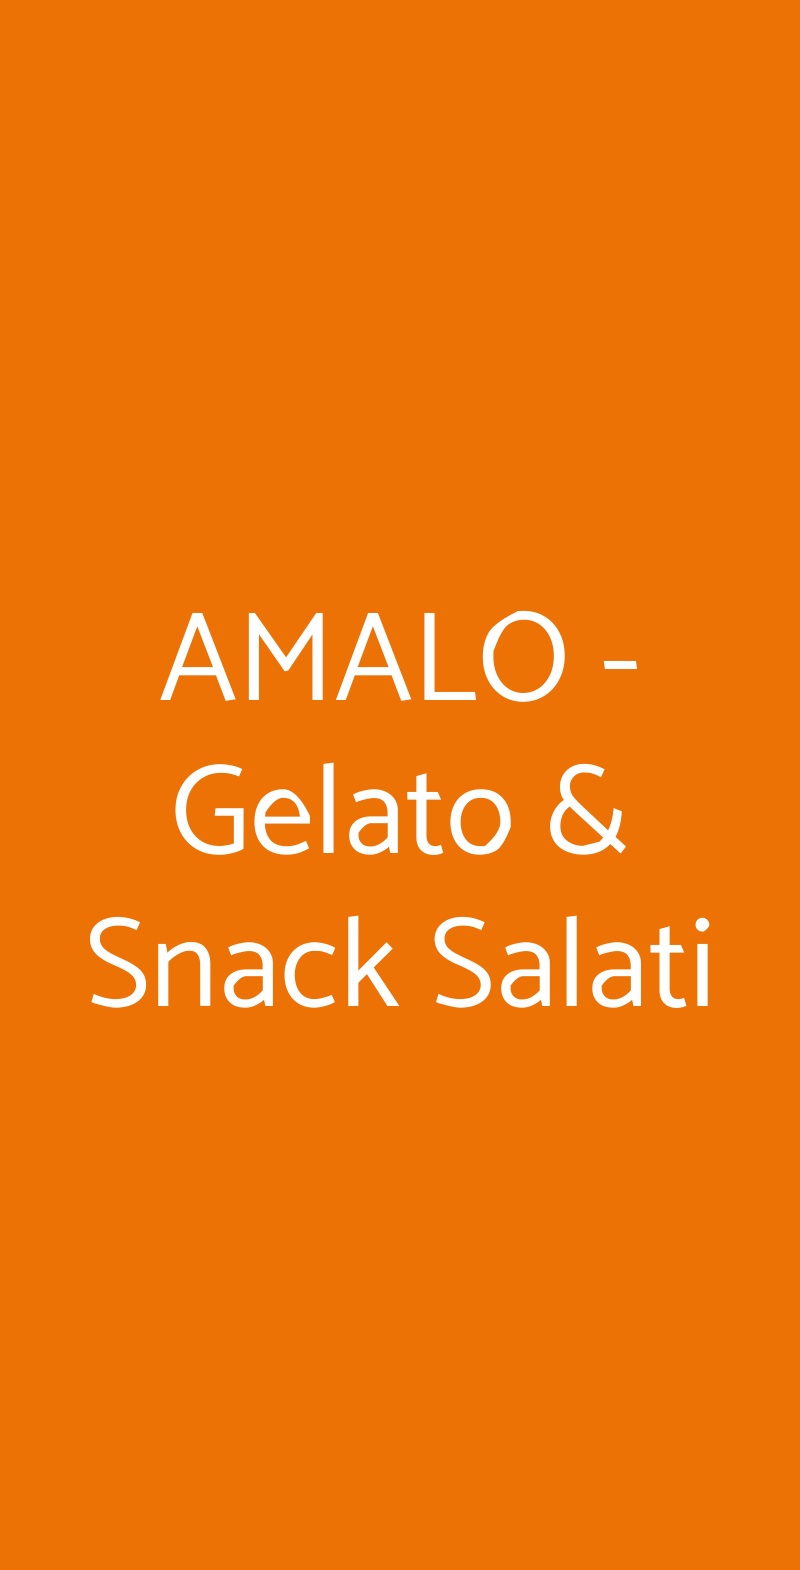 AMALO - Gelato & Snack Salati Milano menù 1 pagina